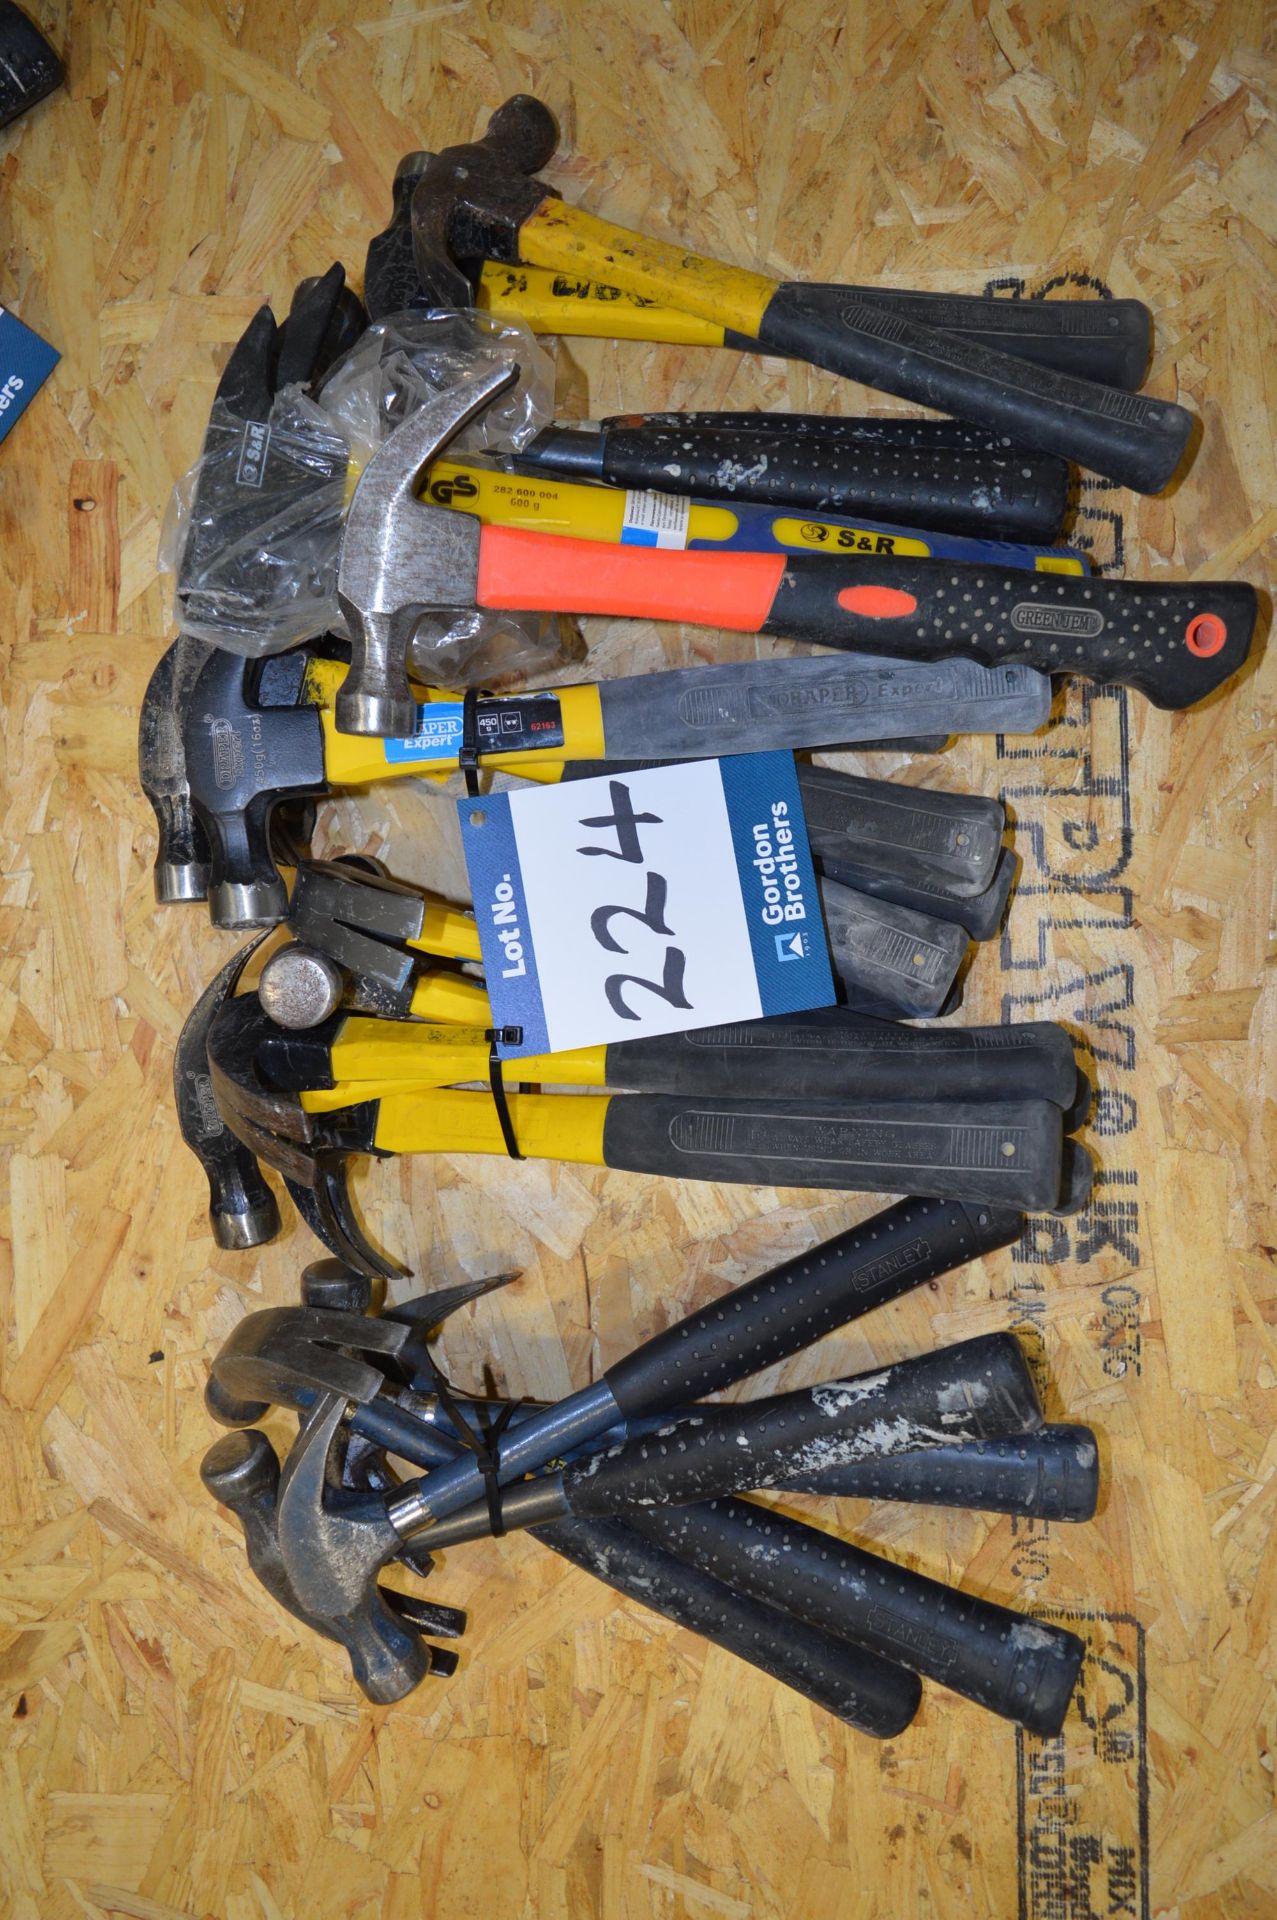 20x (no.) various hammers